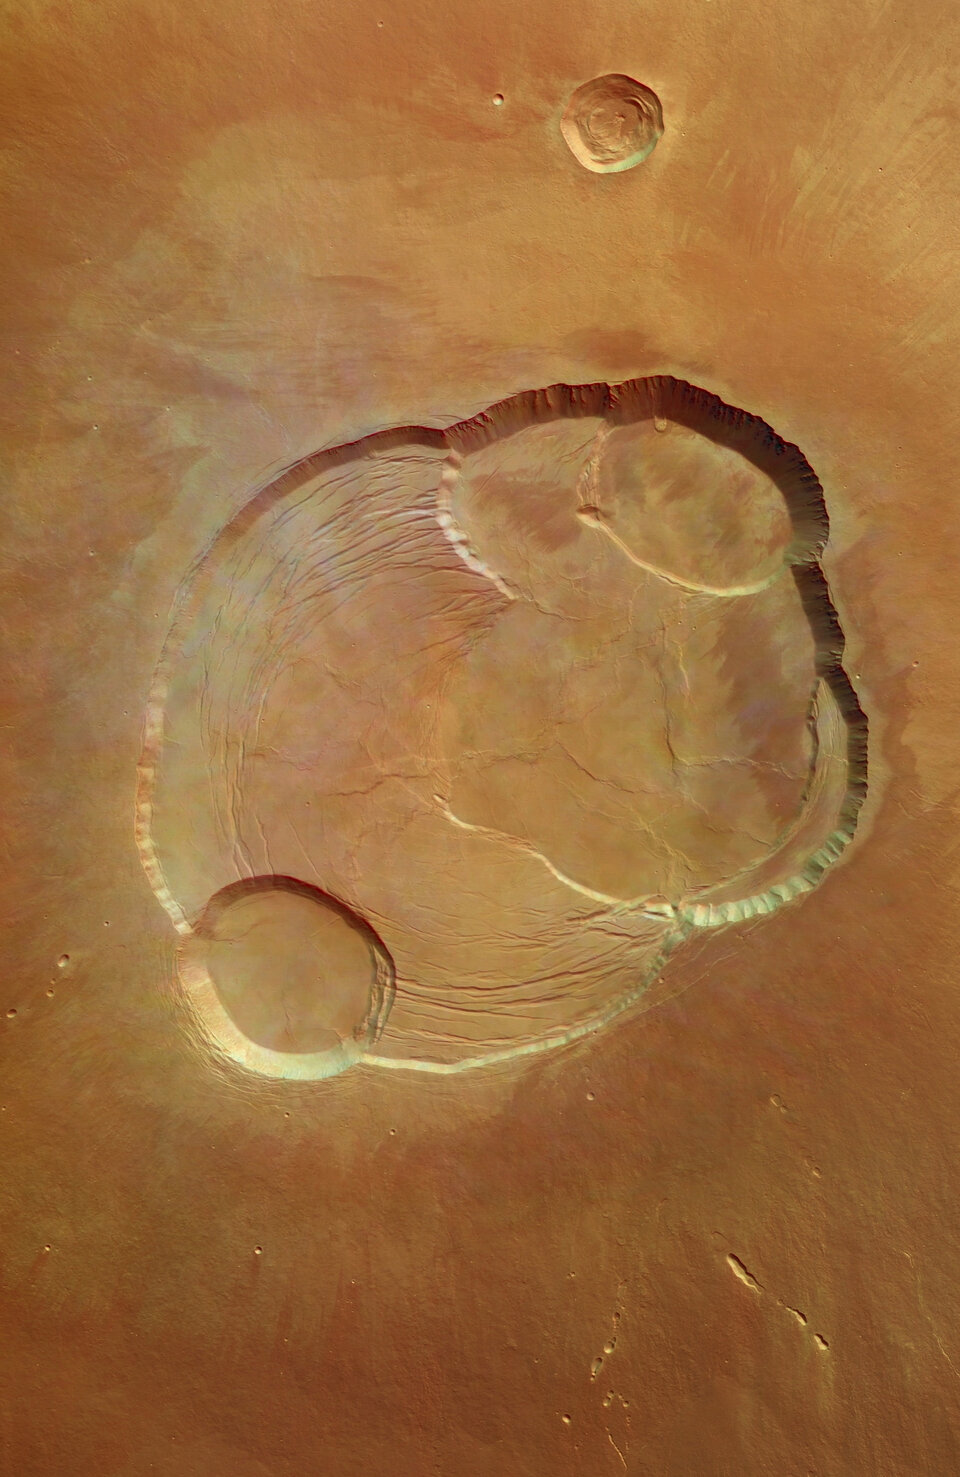 De Marsvulkaan Olympus Mons door ESA's succesvolle Marsverkenner Mars Express